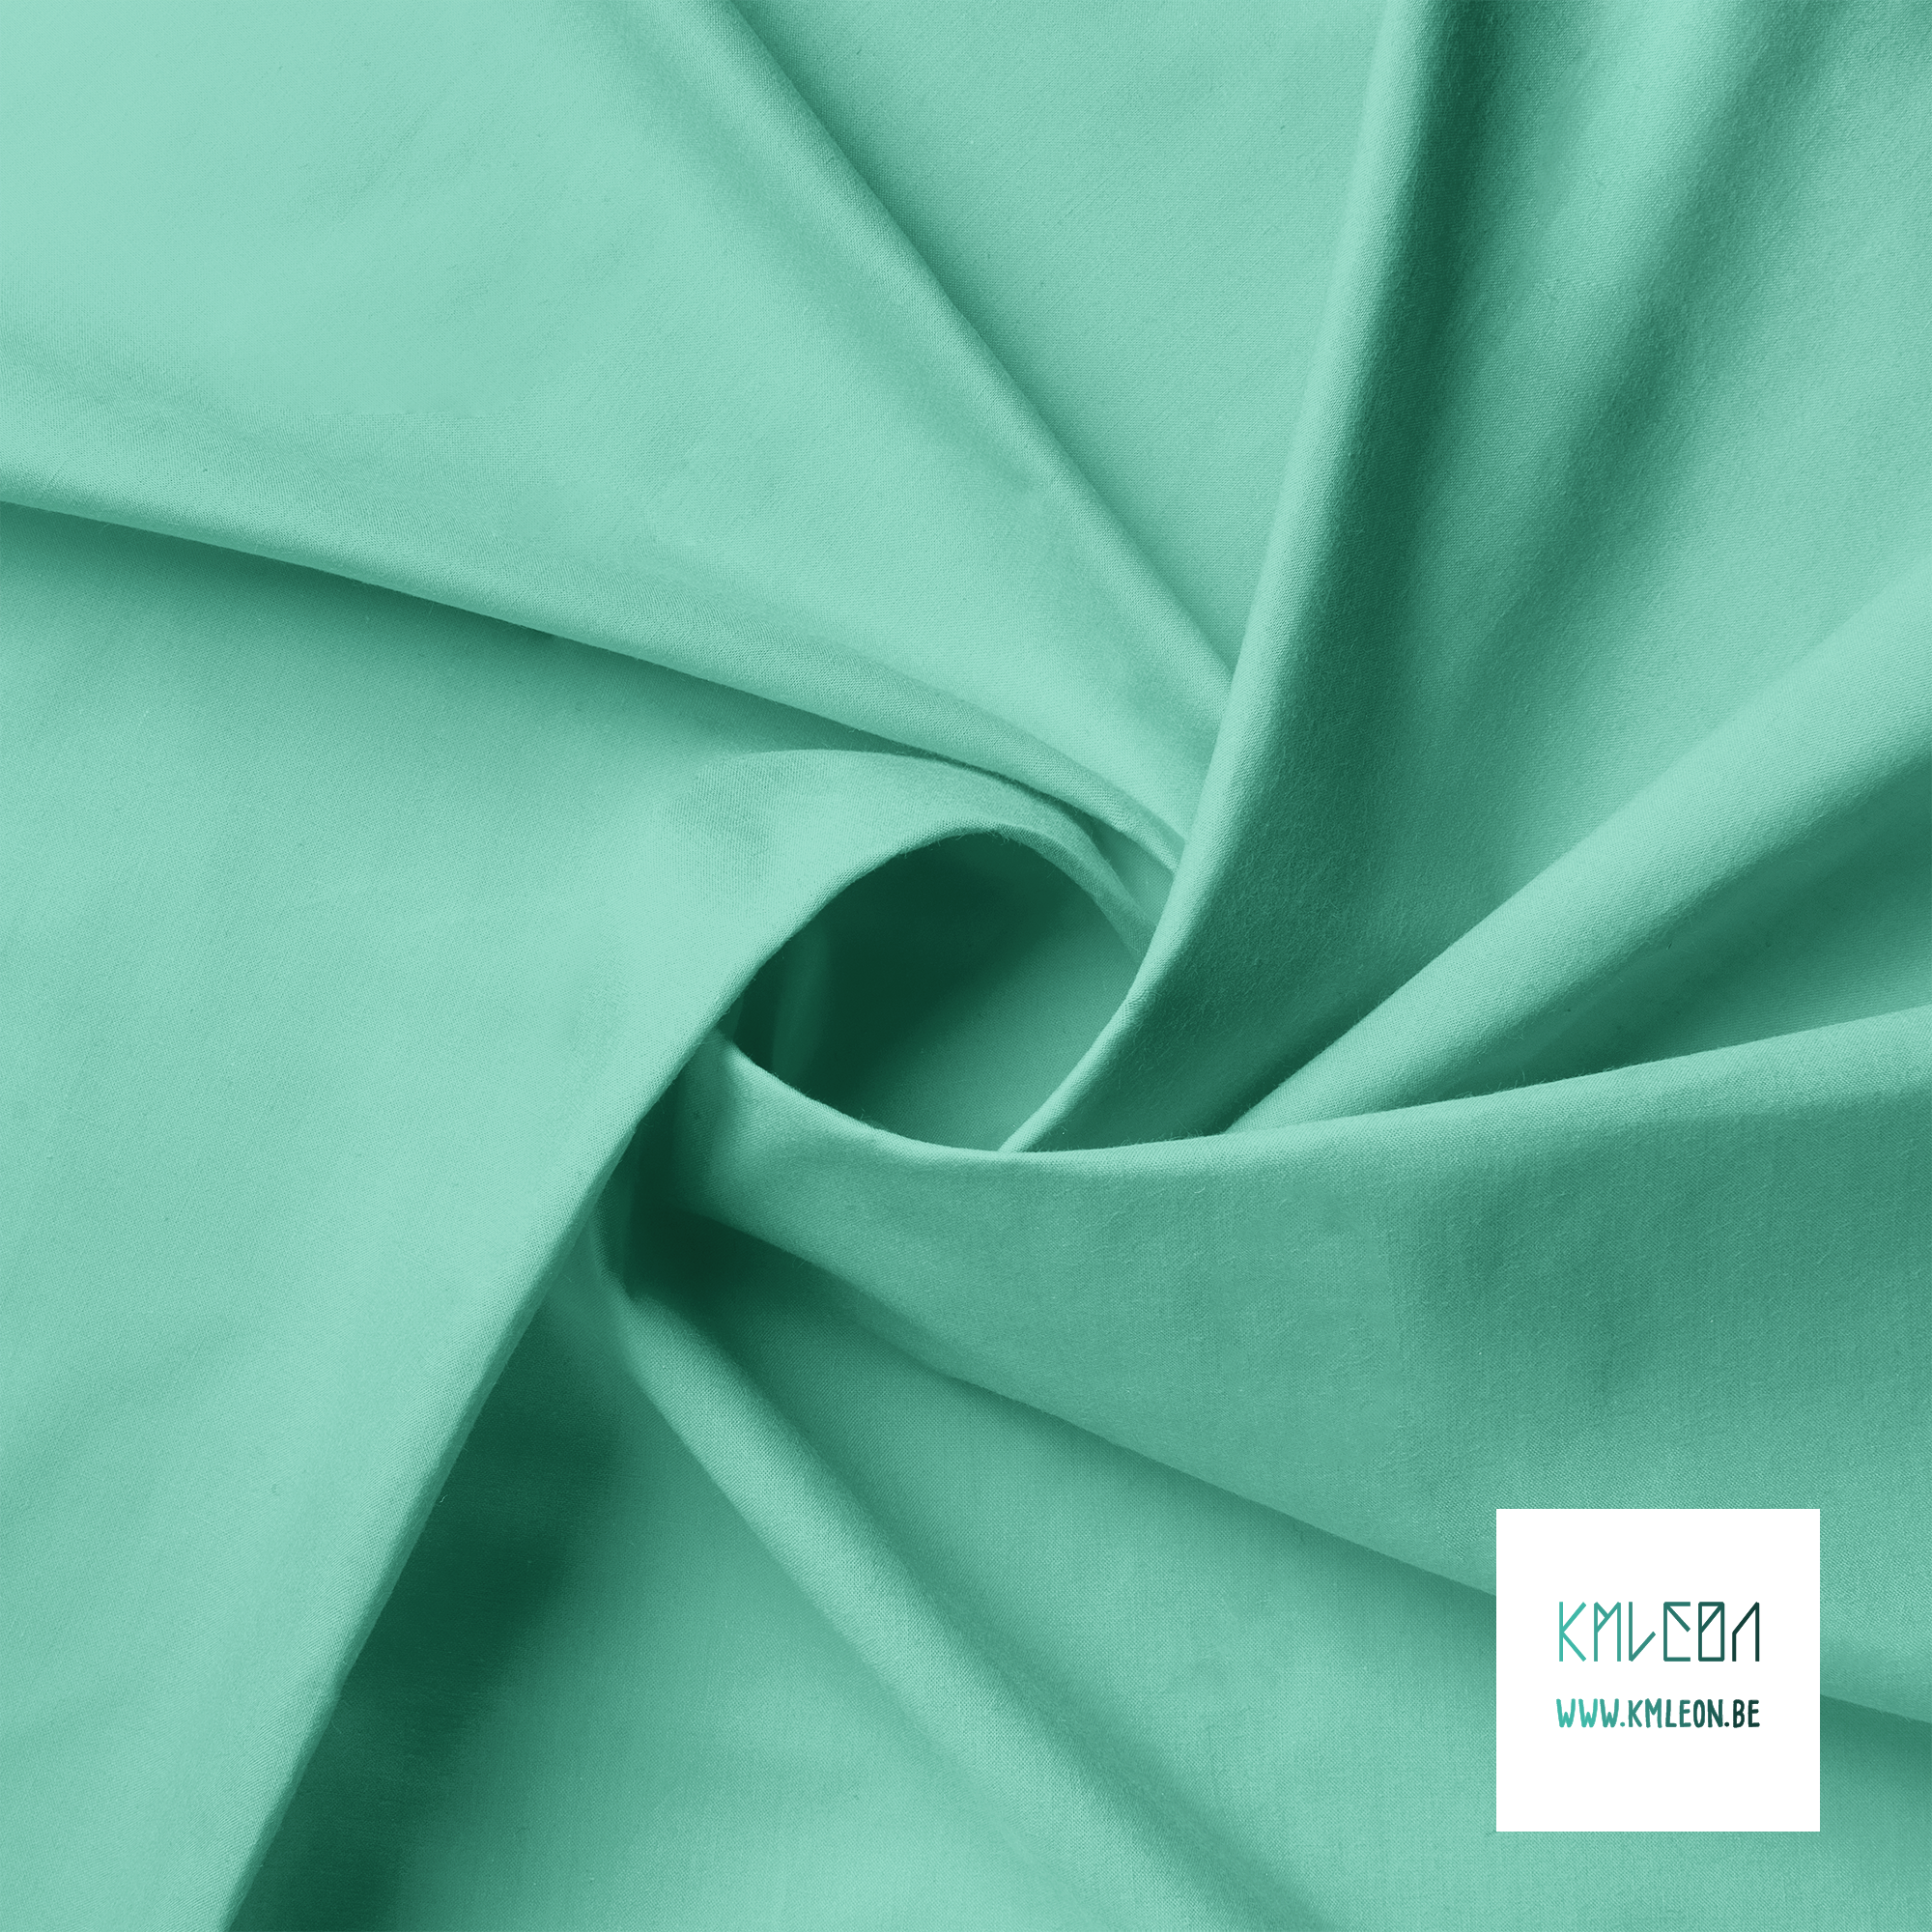 Solid seafoam green fabric